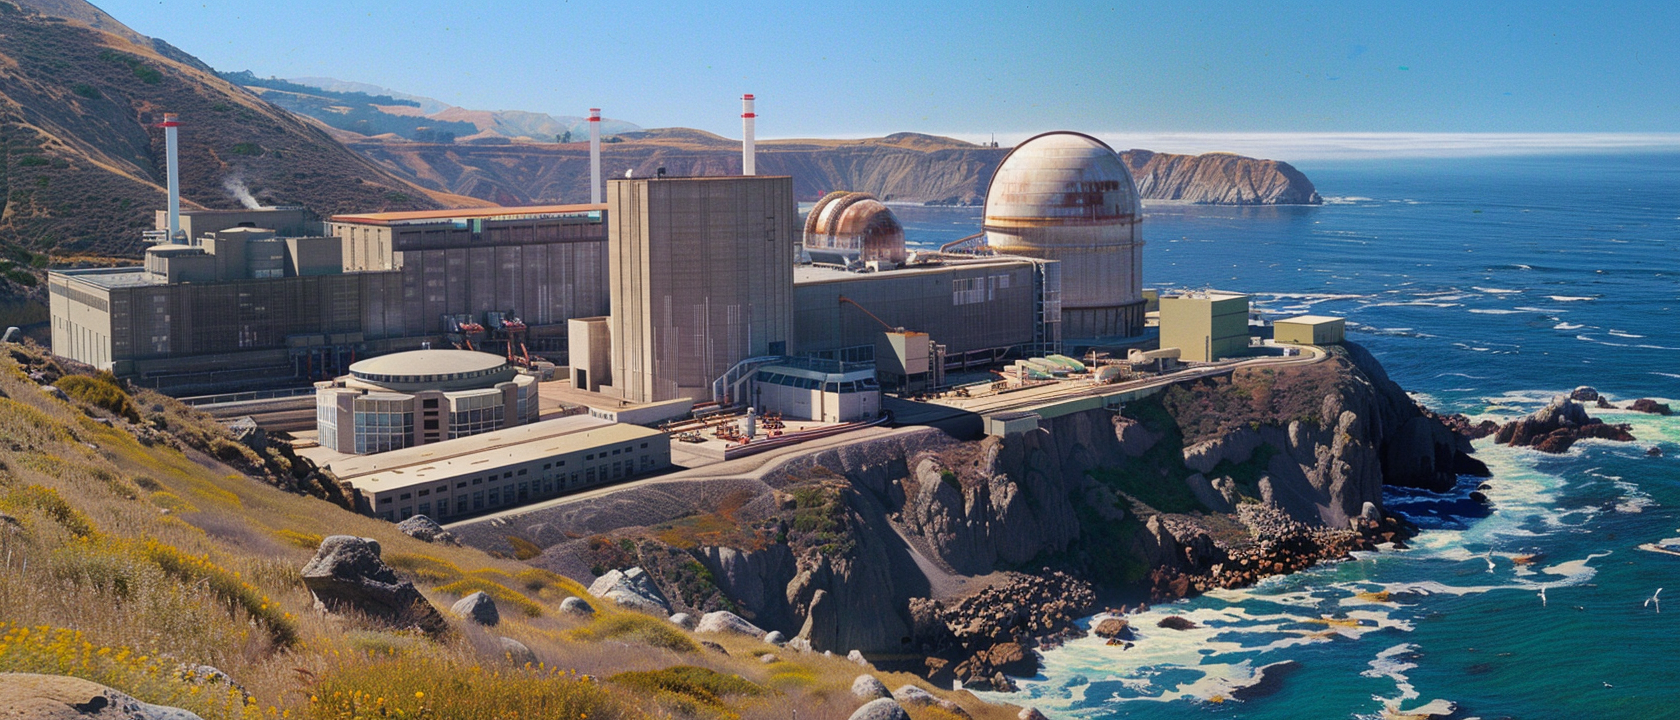 Campaign Against Diablo Canyon Nuclear Plant Extension